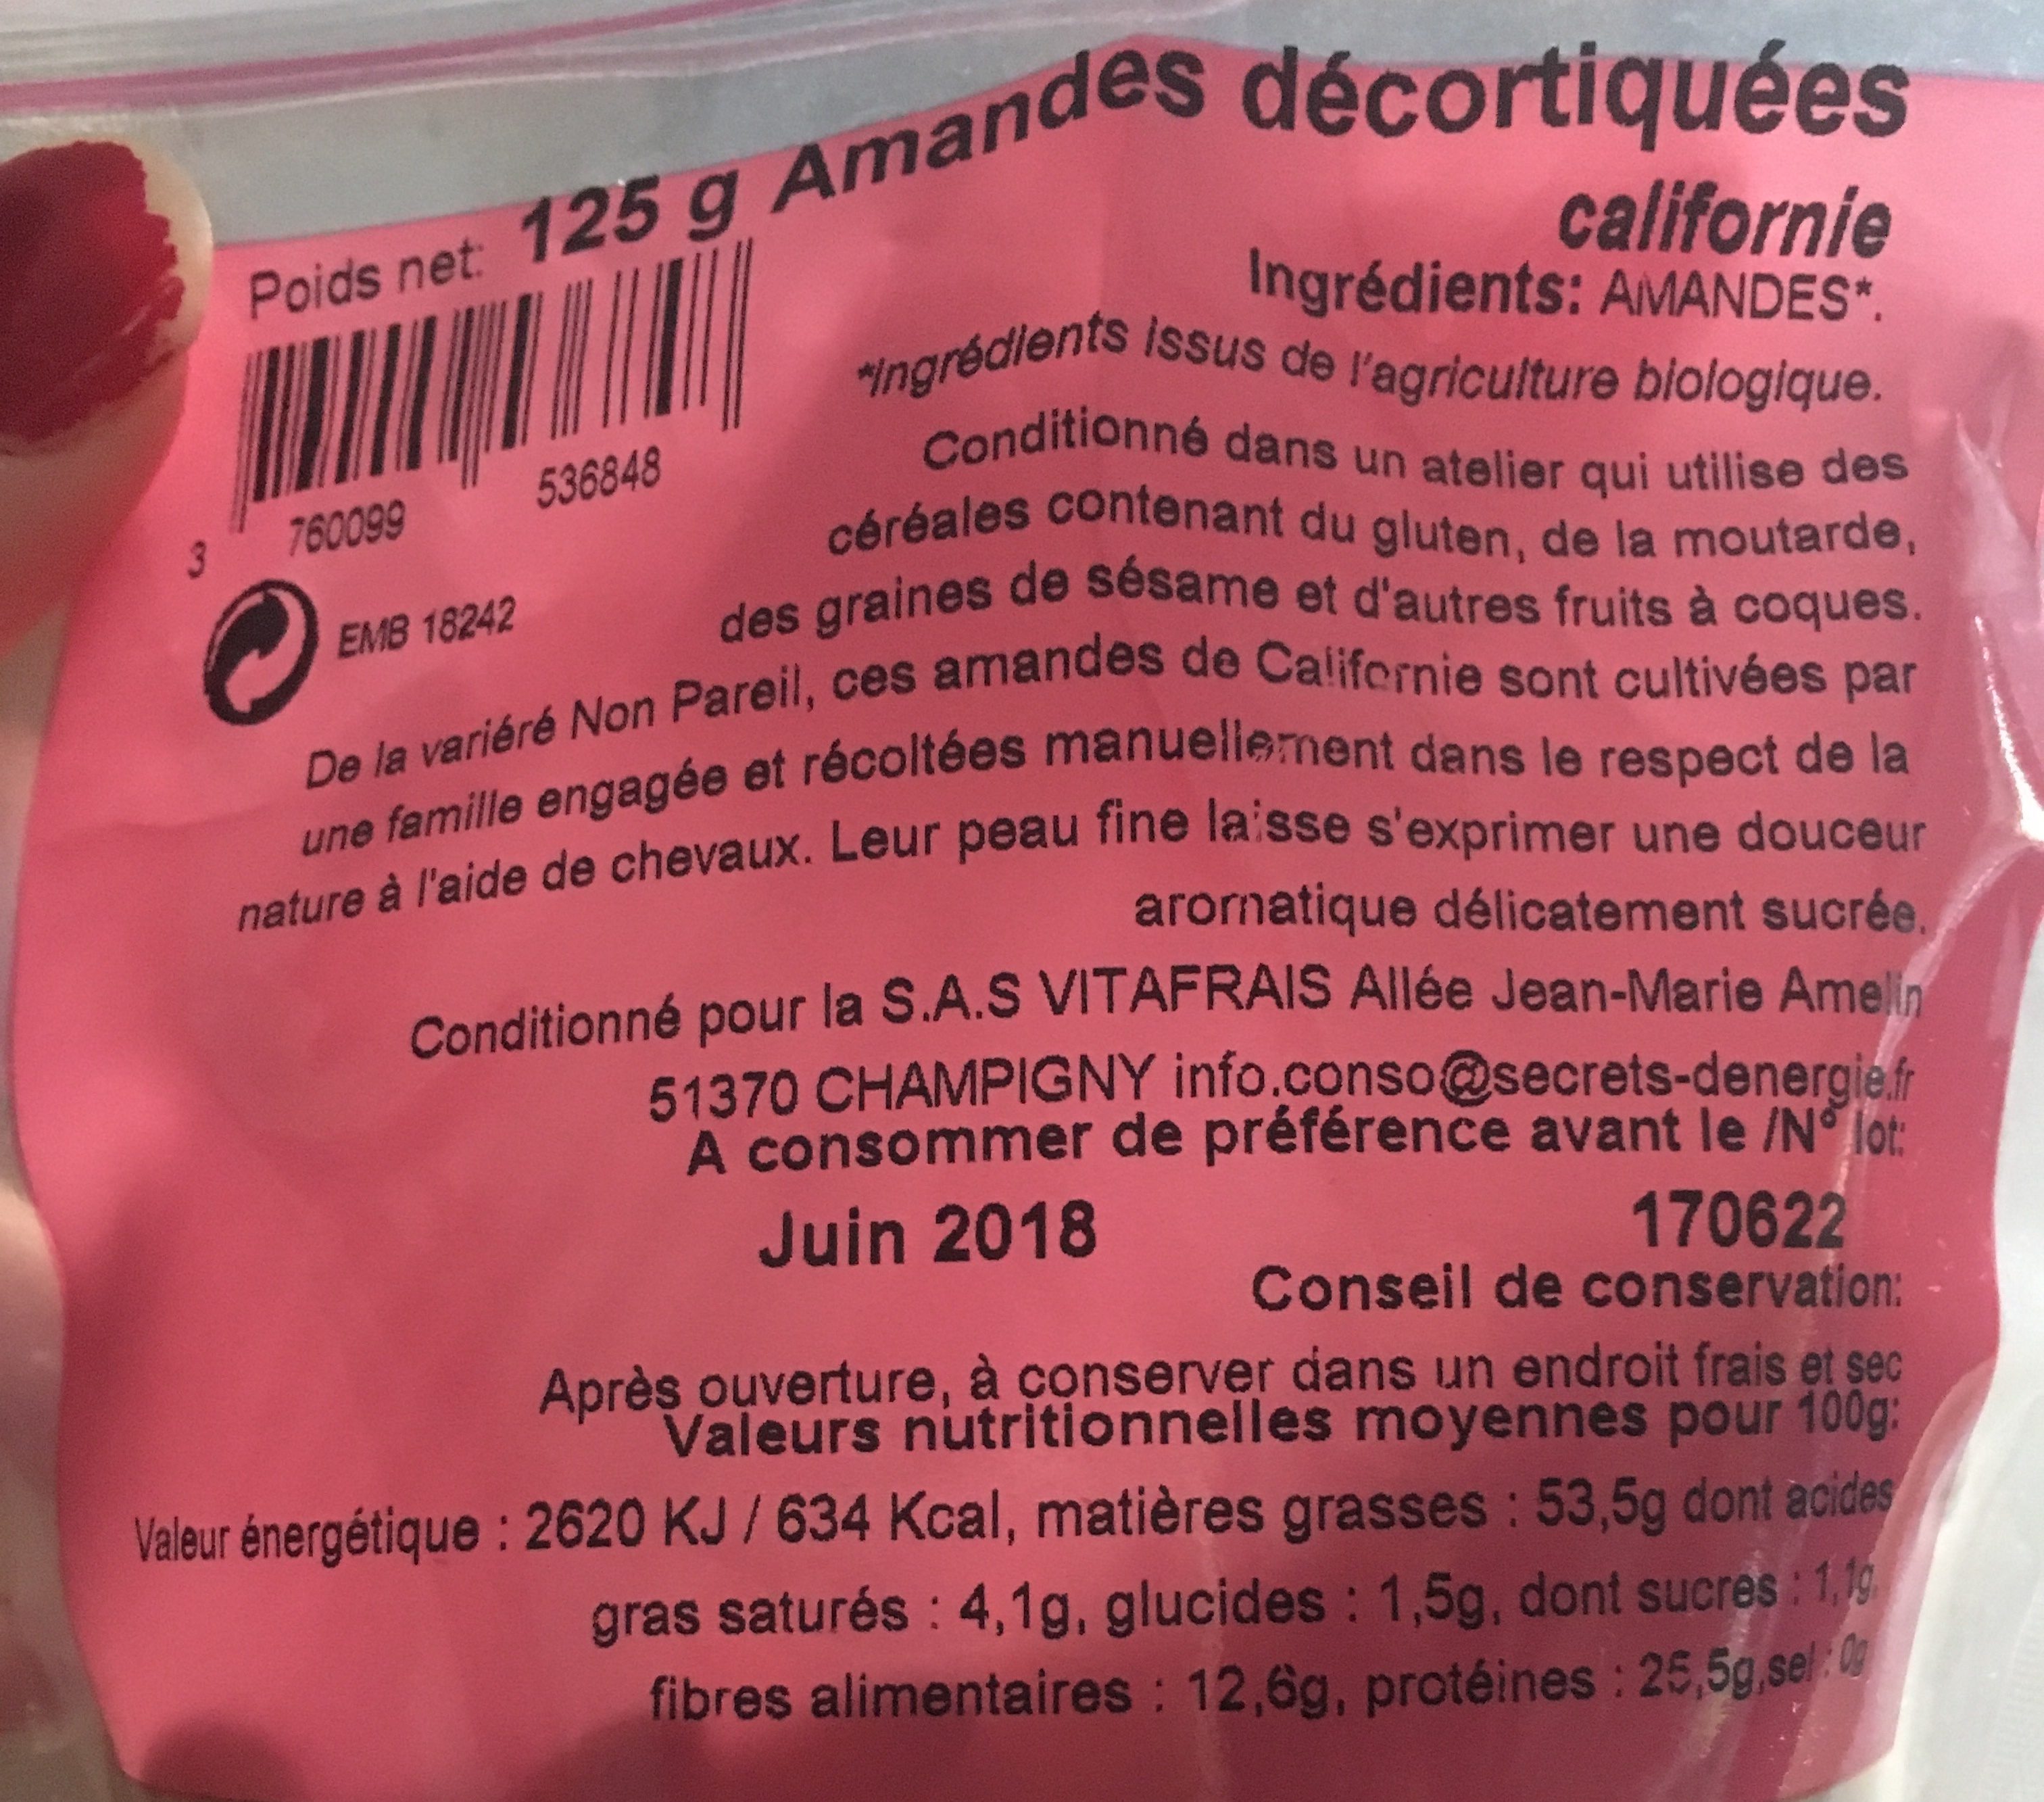 Amandes décortiquées - Ingredienser - fr